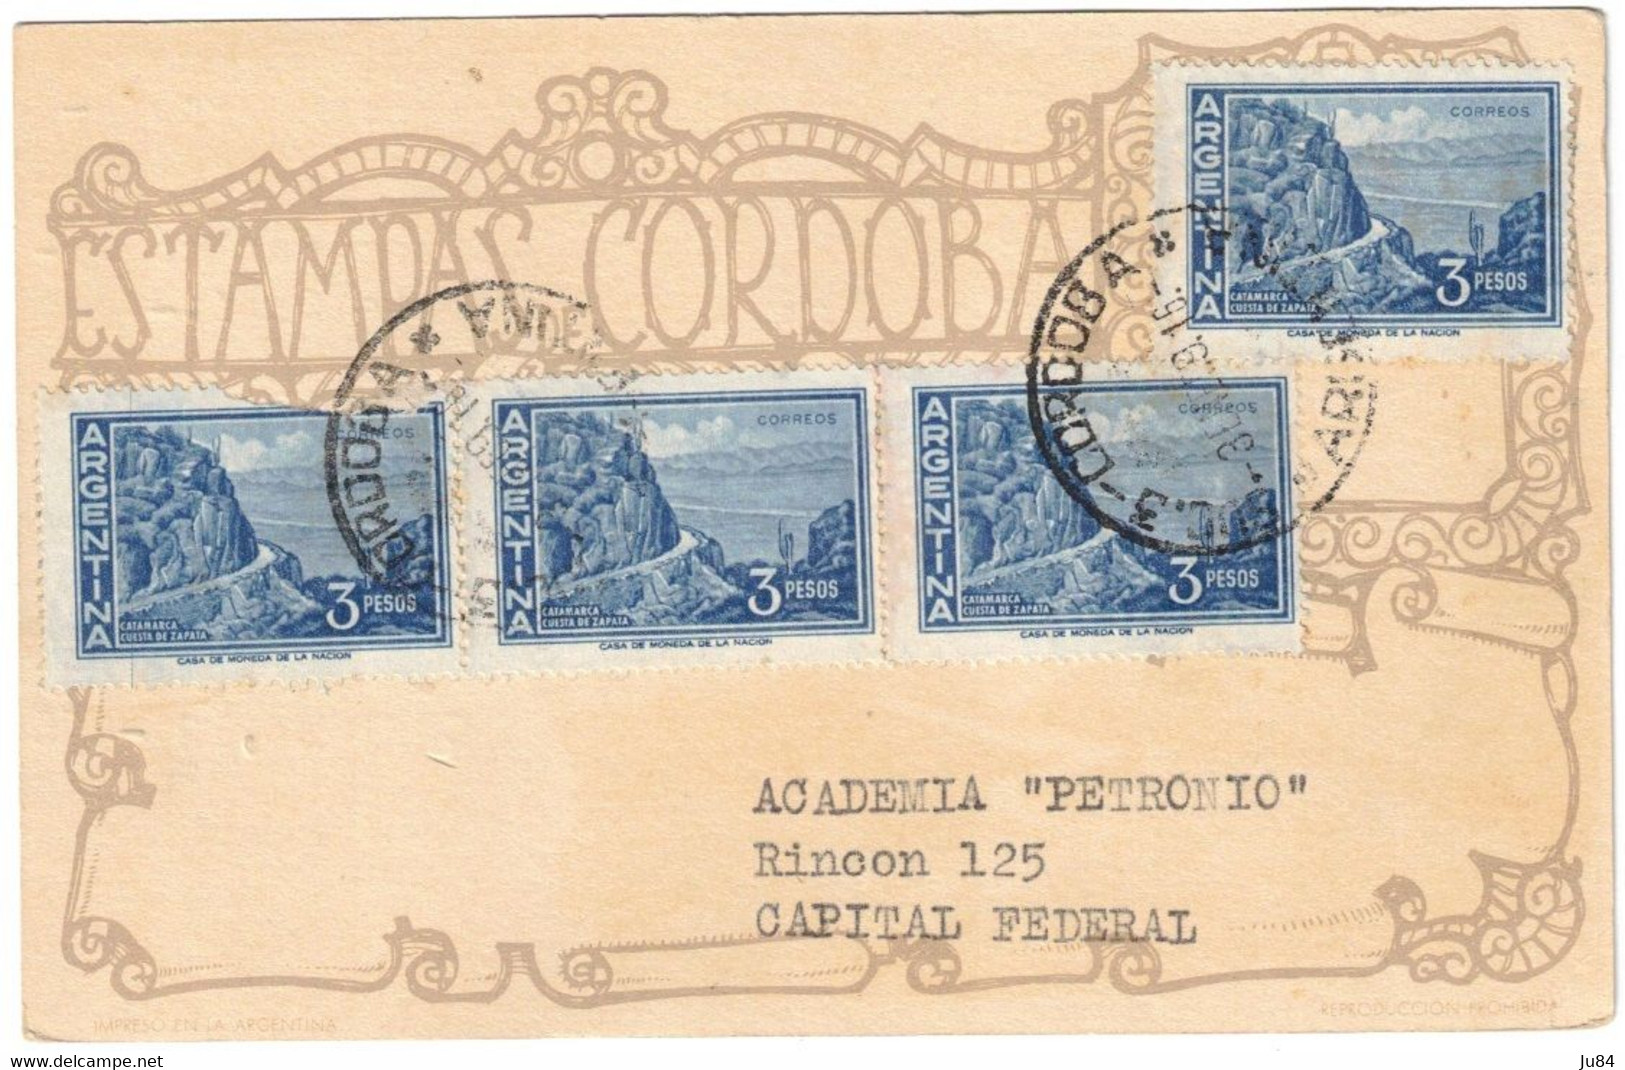 Argentine - Cordoba - Academia Riva - Carte Postale Pour Academia "Petronio" Capital Federal - Signature - 1969 - Lettres & Documents